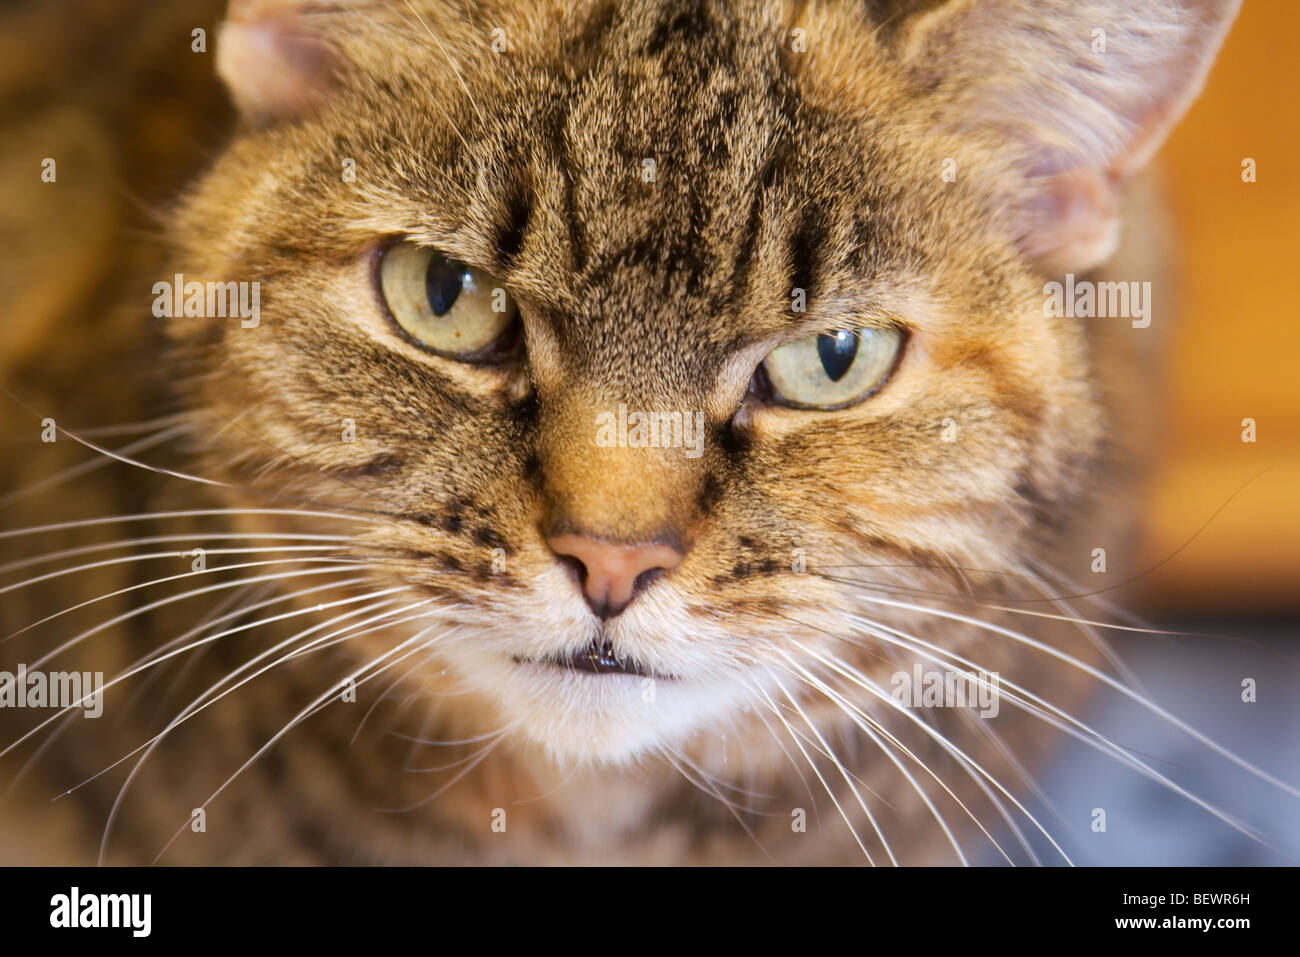 close up shot of tortoiseshell tabby cat's face Stock Photo